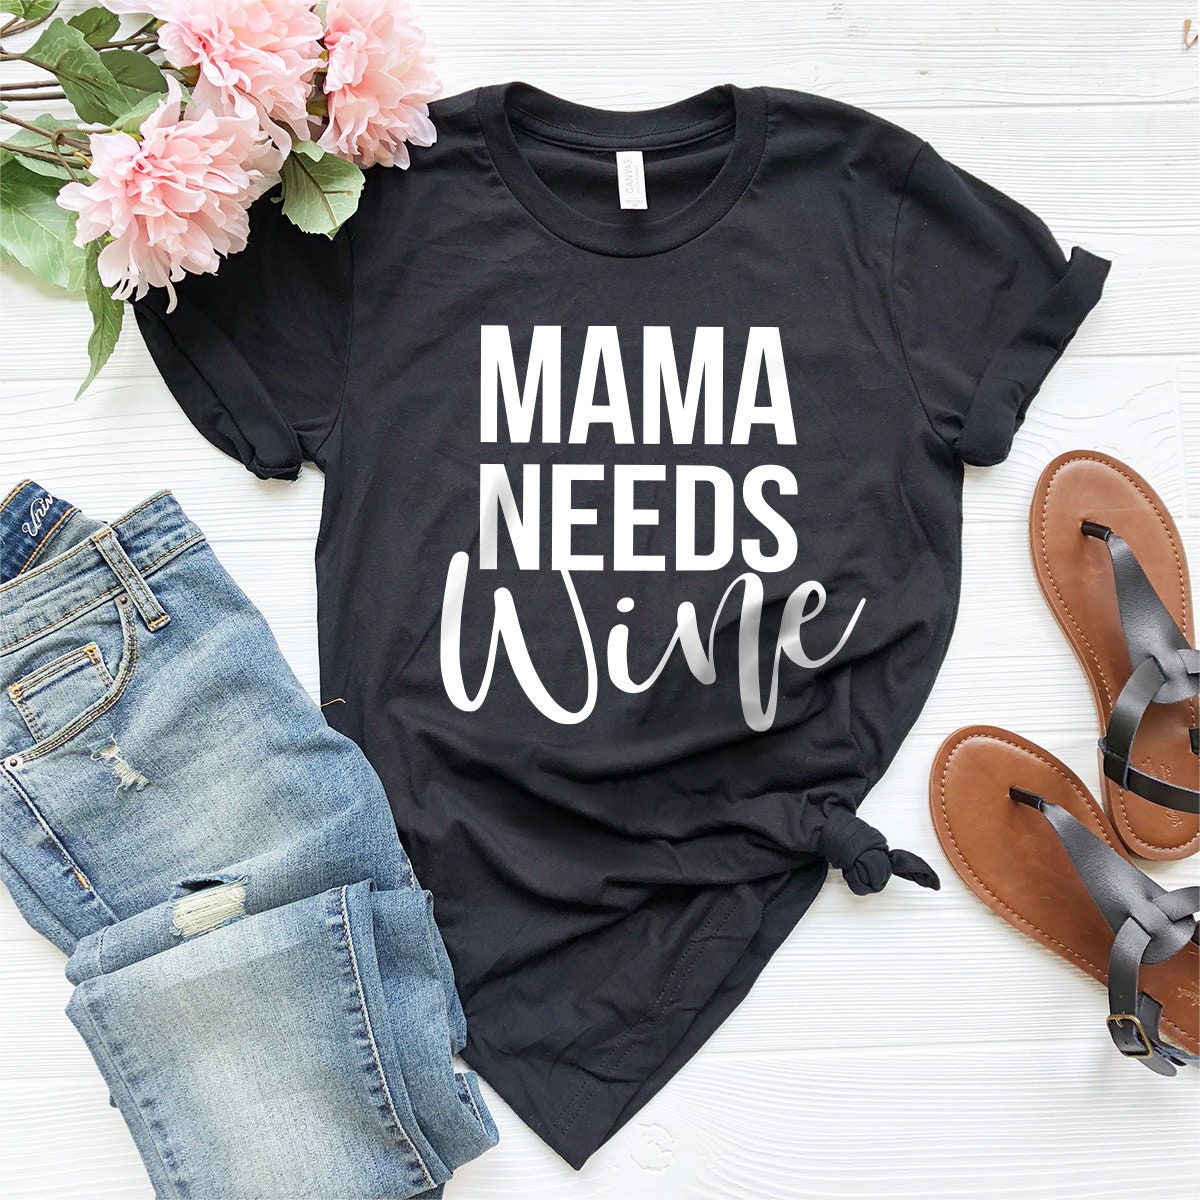 Mama Needs Wine Shirt, Wine Shirt, Wine Lover Shirt, Wine Tee, Funny Wine Shirt, Drinking Shirt, Wine Tshirt - Fastdeliverytees.com